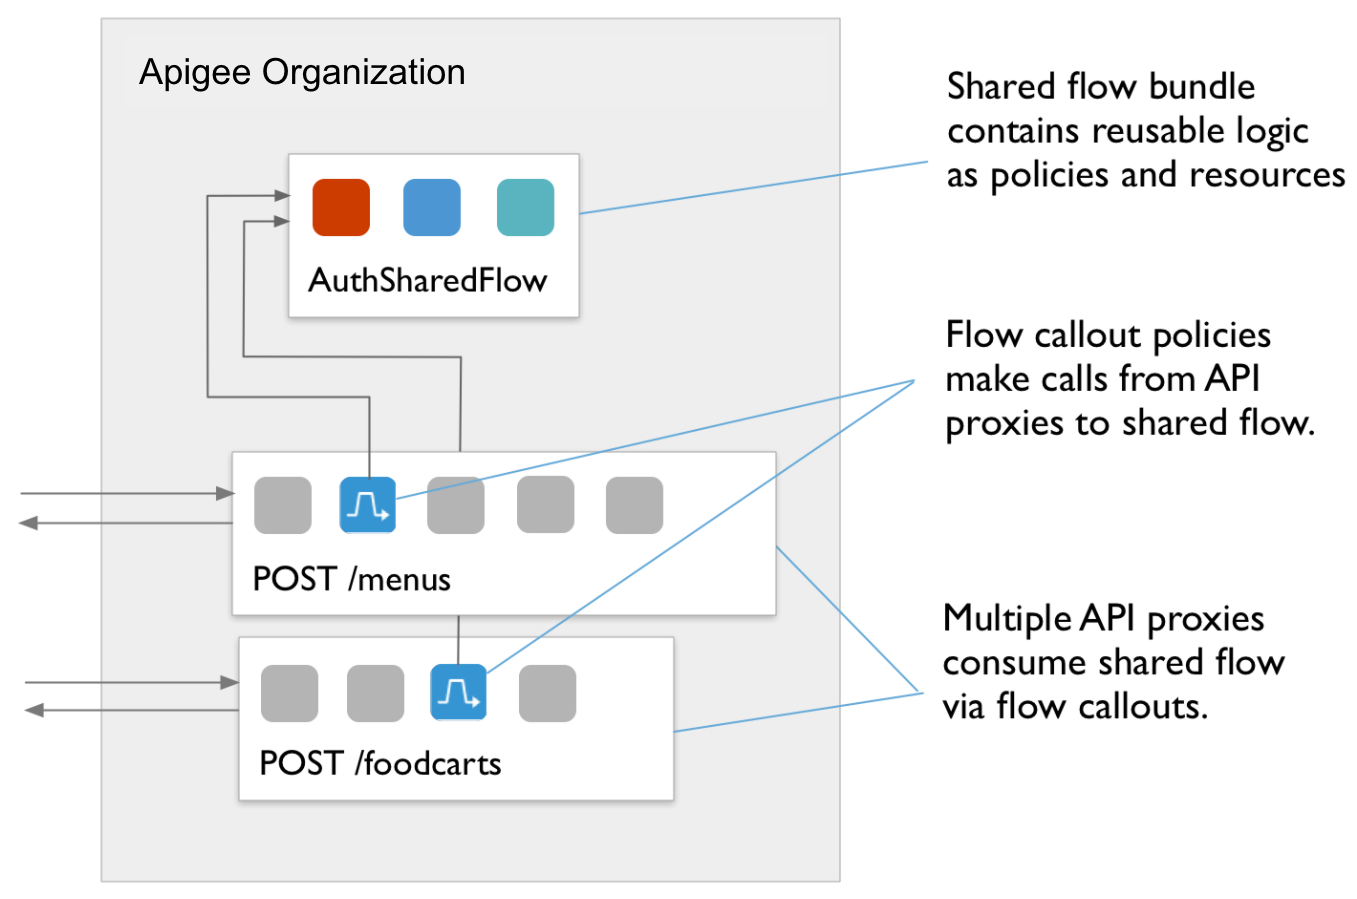 POST/foodcarts 정책에서 AuthSharedFlow에 대한 POST/menus 정책을 보여주는 흐름도.

          콜아웃 텍스트:
a) 여러 API 프록시가 FlowCallout을 통해 공유 흐름을 사용합니다.
          b) FlowCallout 정책은 API 프록시에서 공유 흐름을 호출합니다.
          c) 공유 흐름 번들에는 정책 및 리소스로 재사용 가능한 로직이 포함됩니다.